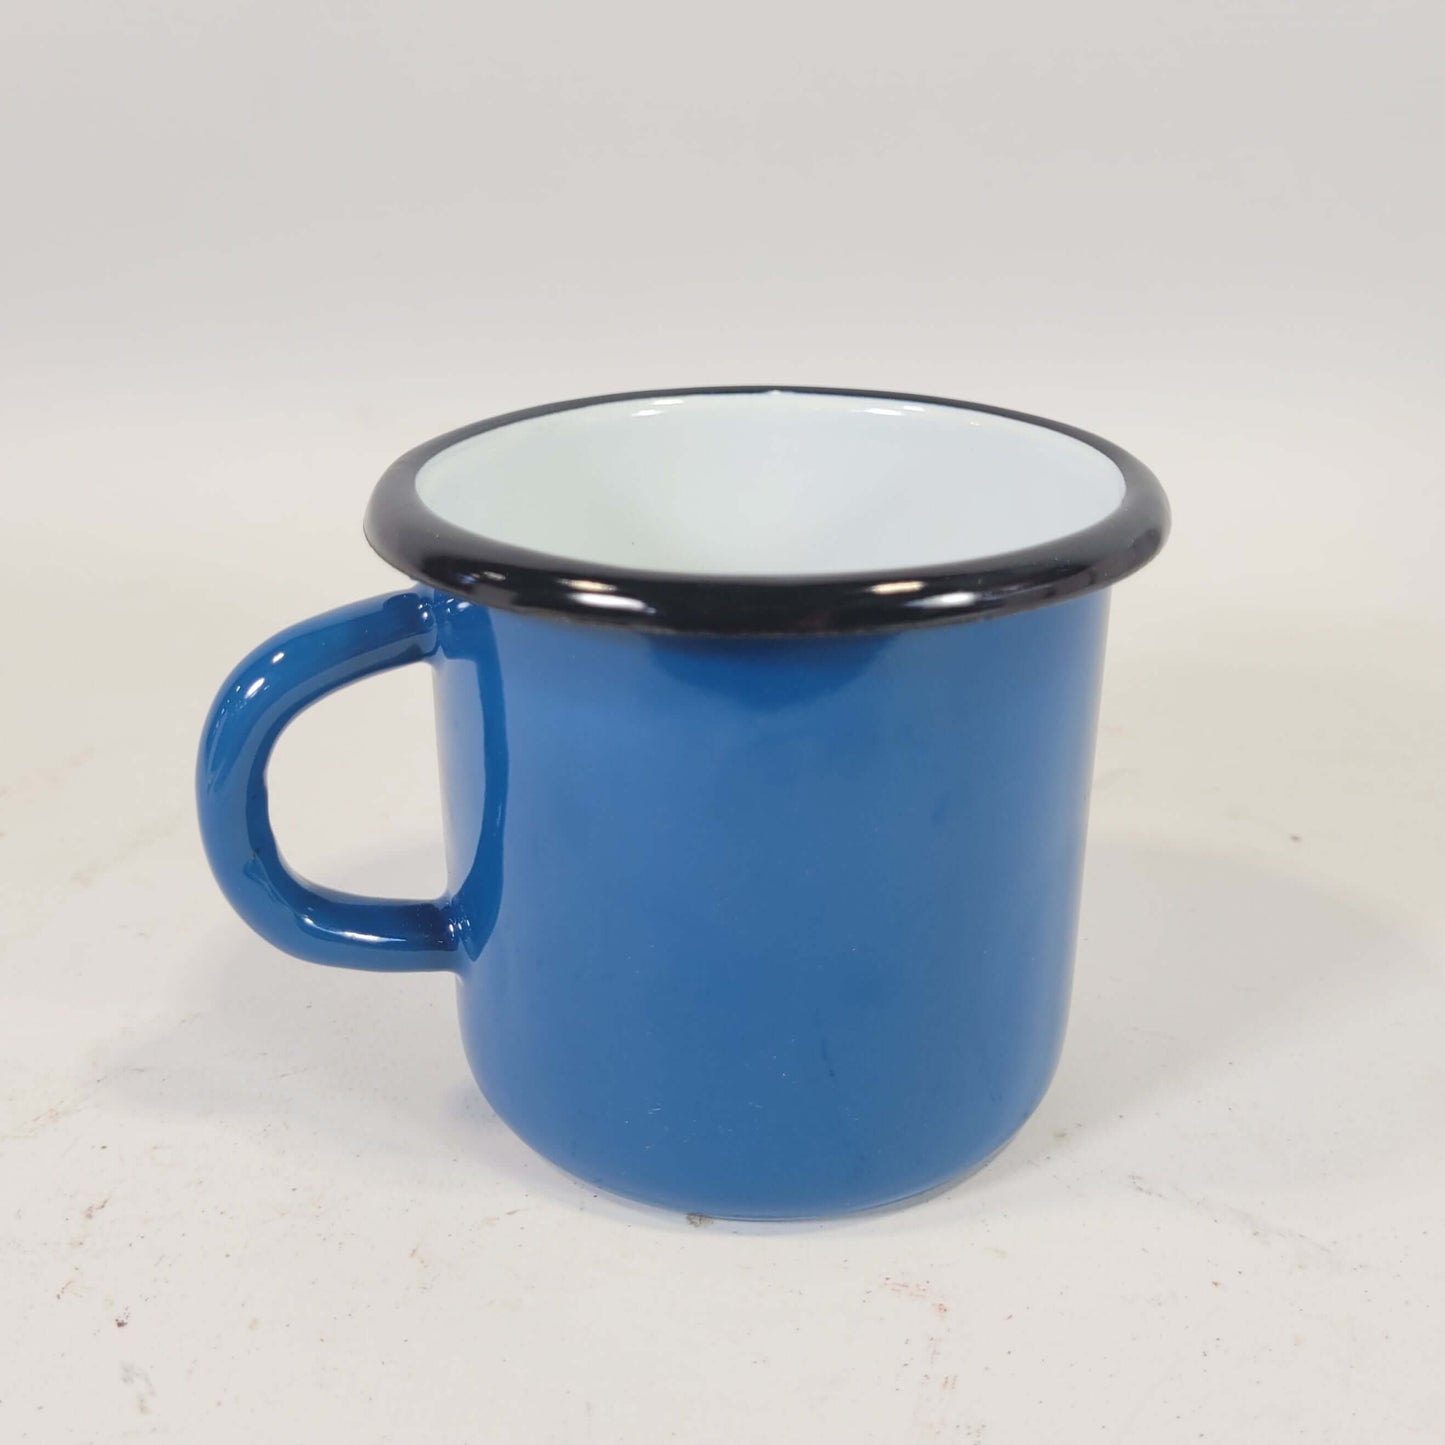 Enamel mug from Ukraine | Vintage | Fair Trade for Peace